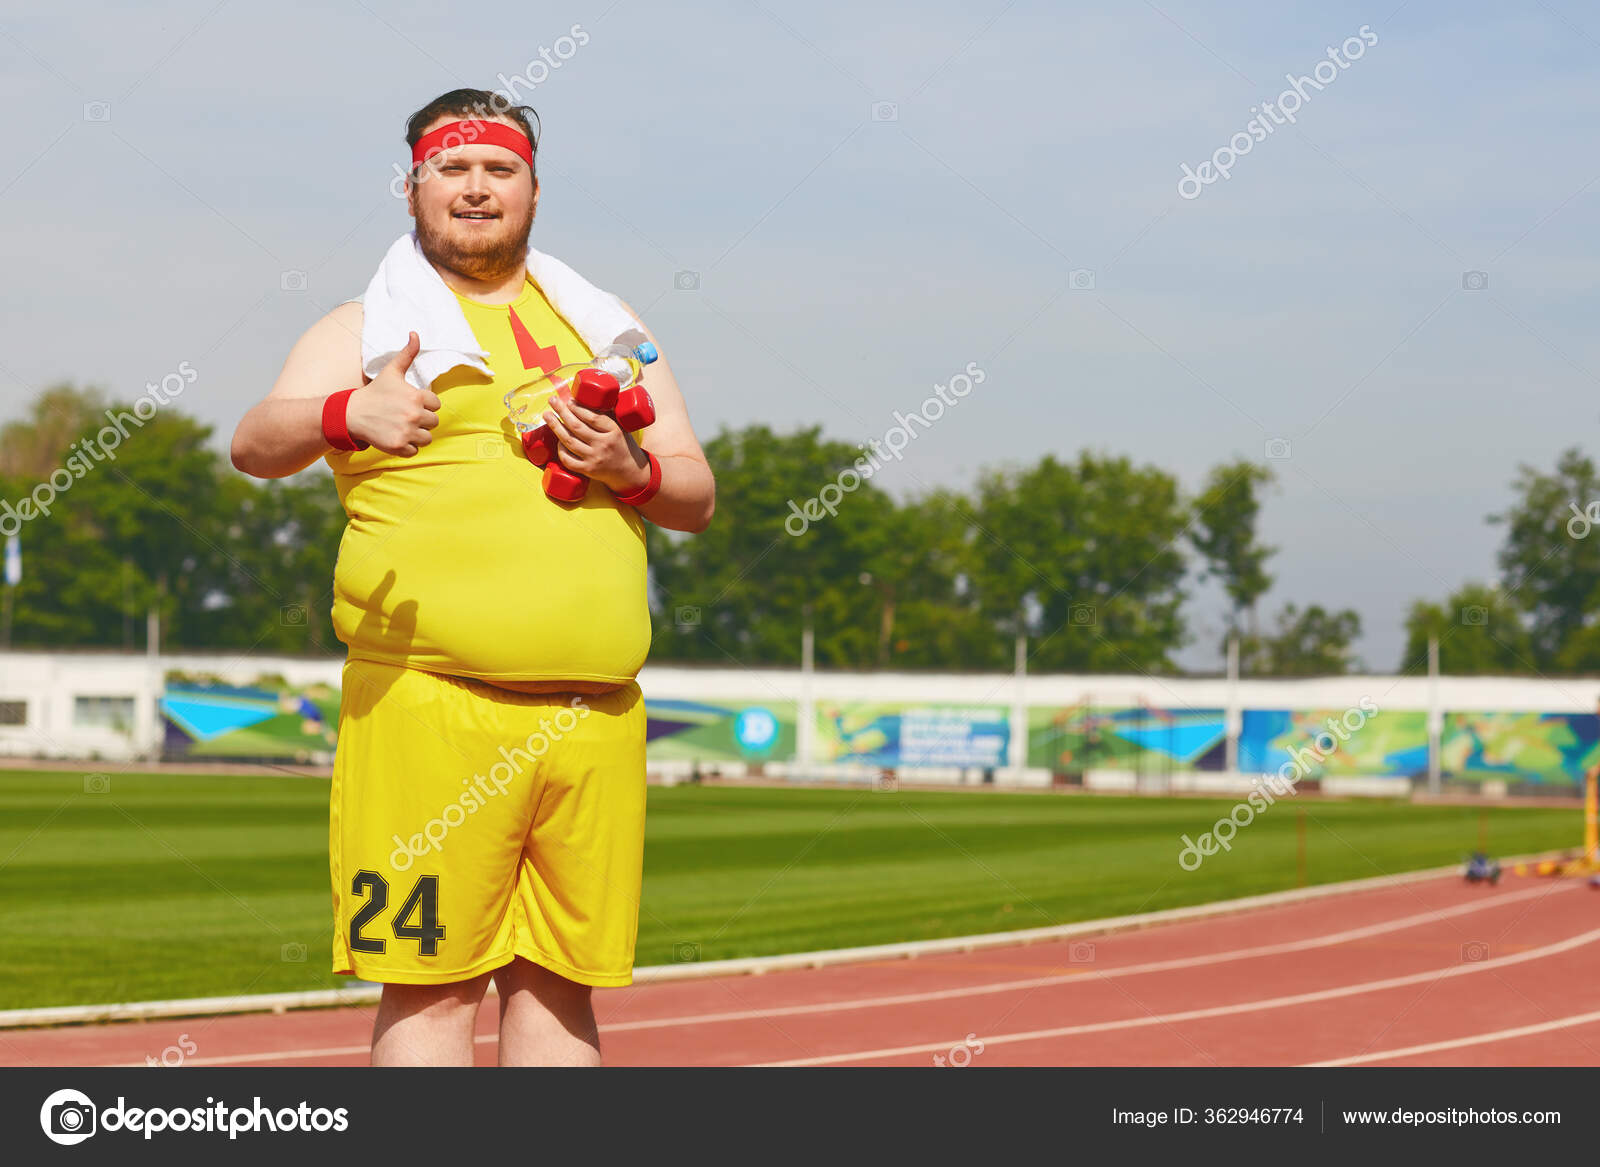 mand i gul sportstøj sport på stadion om — Stock-foto © lacheev #362946774